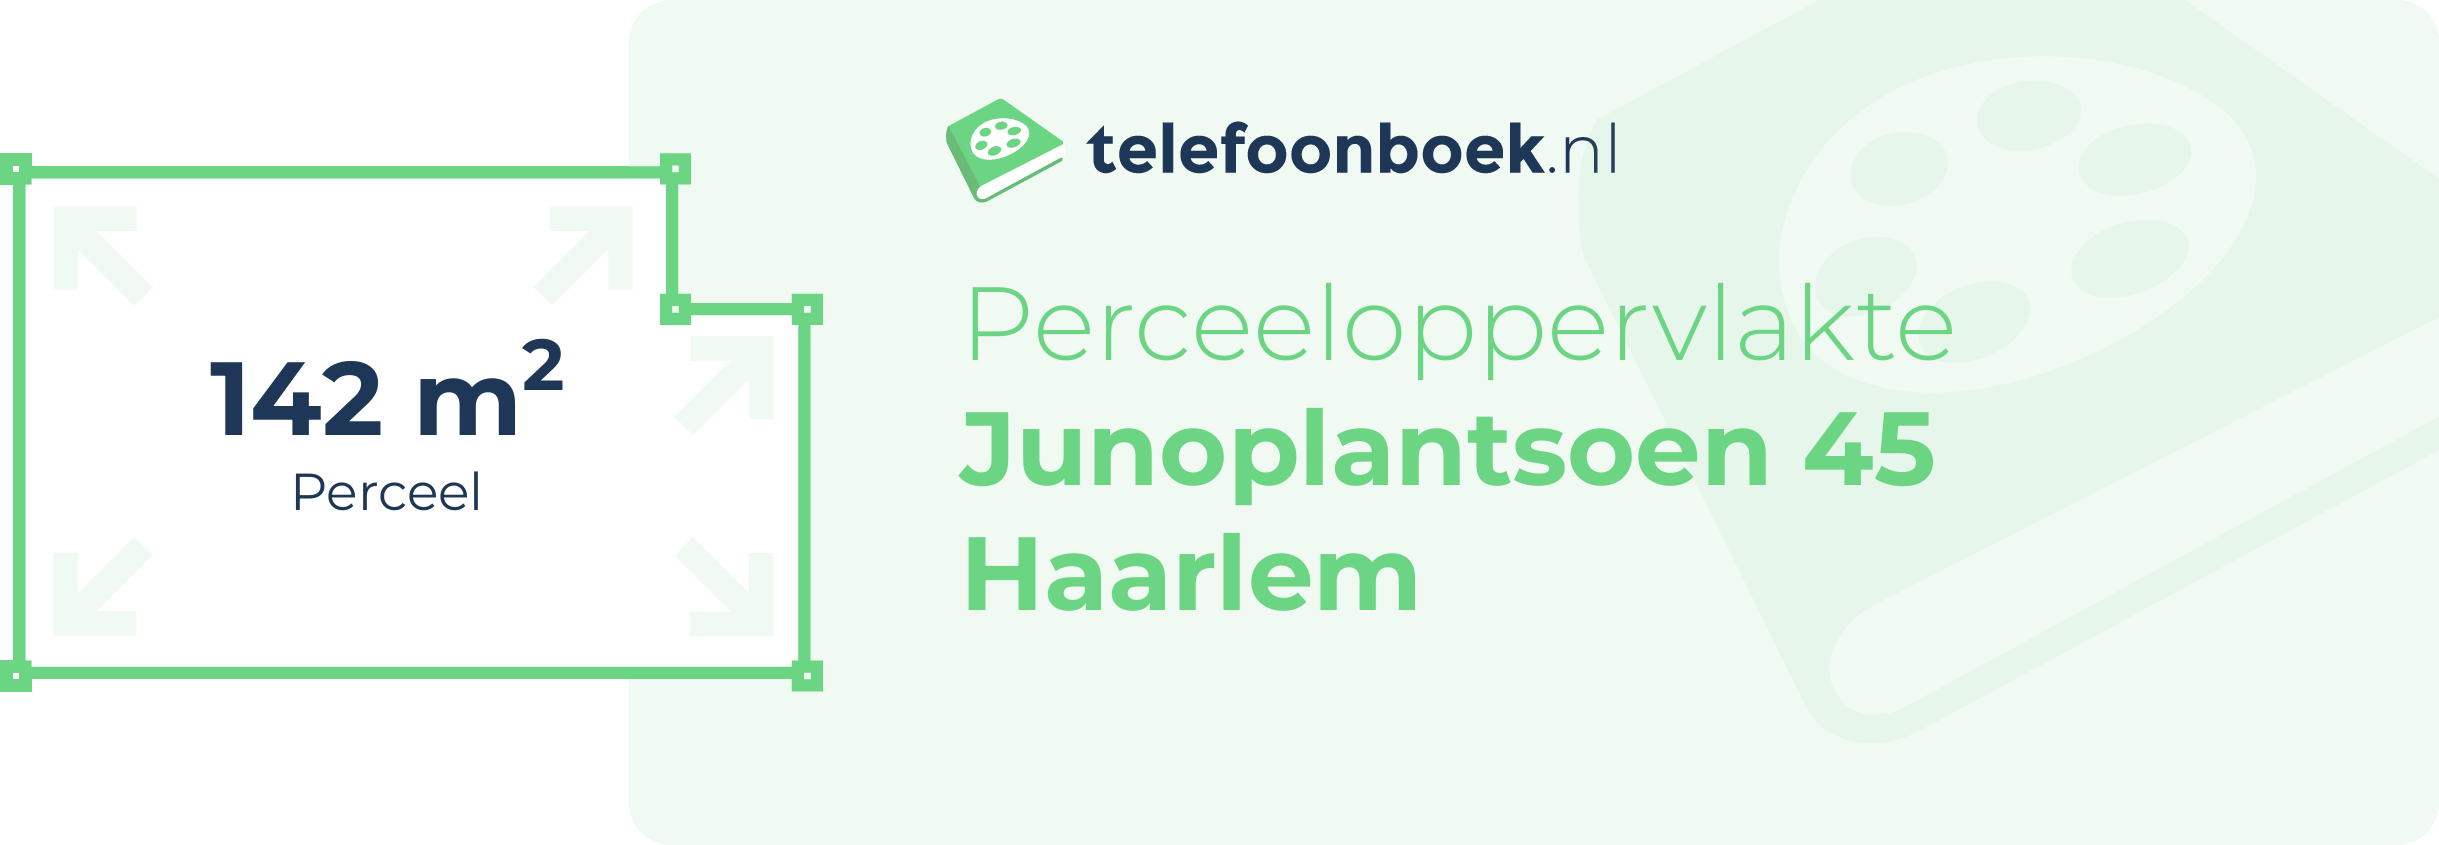 Perceeloppervlakte Junoplantsoen 45 Haarlem